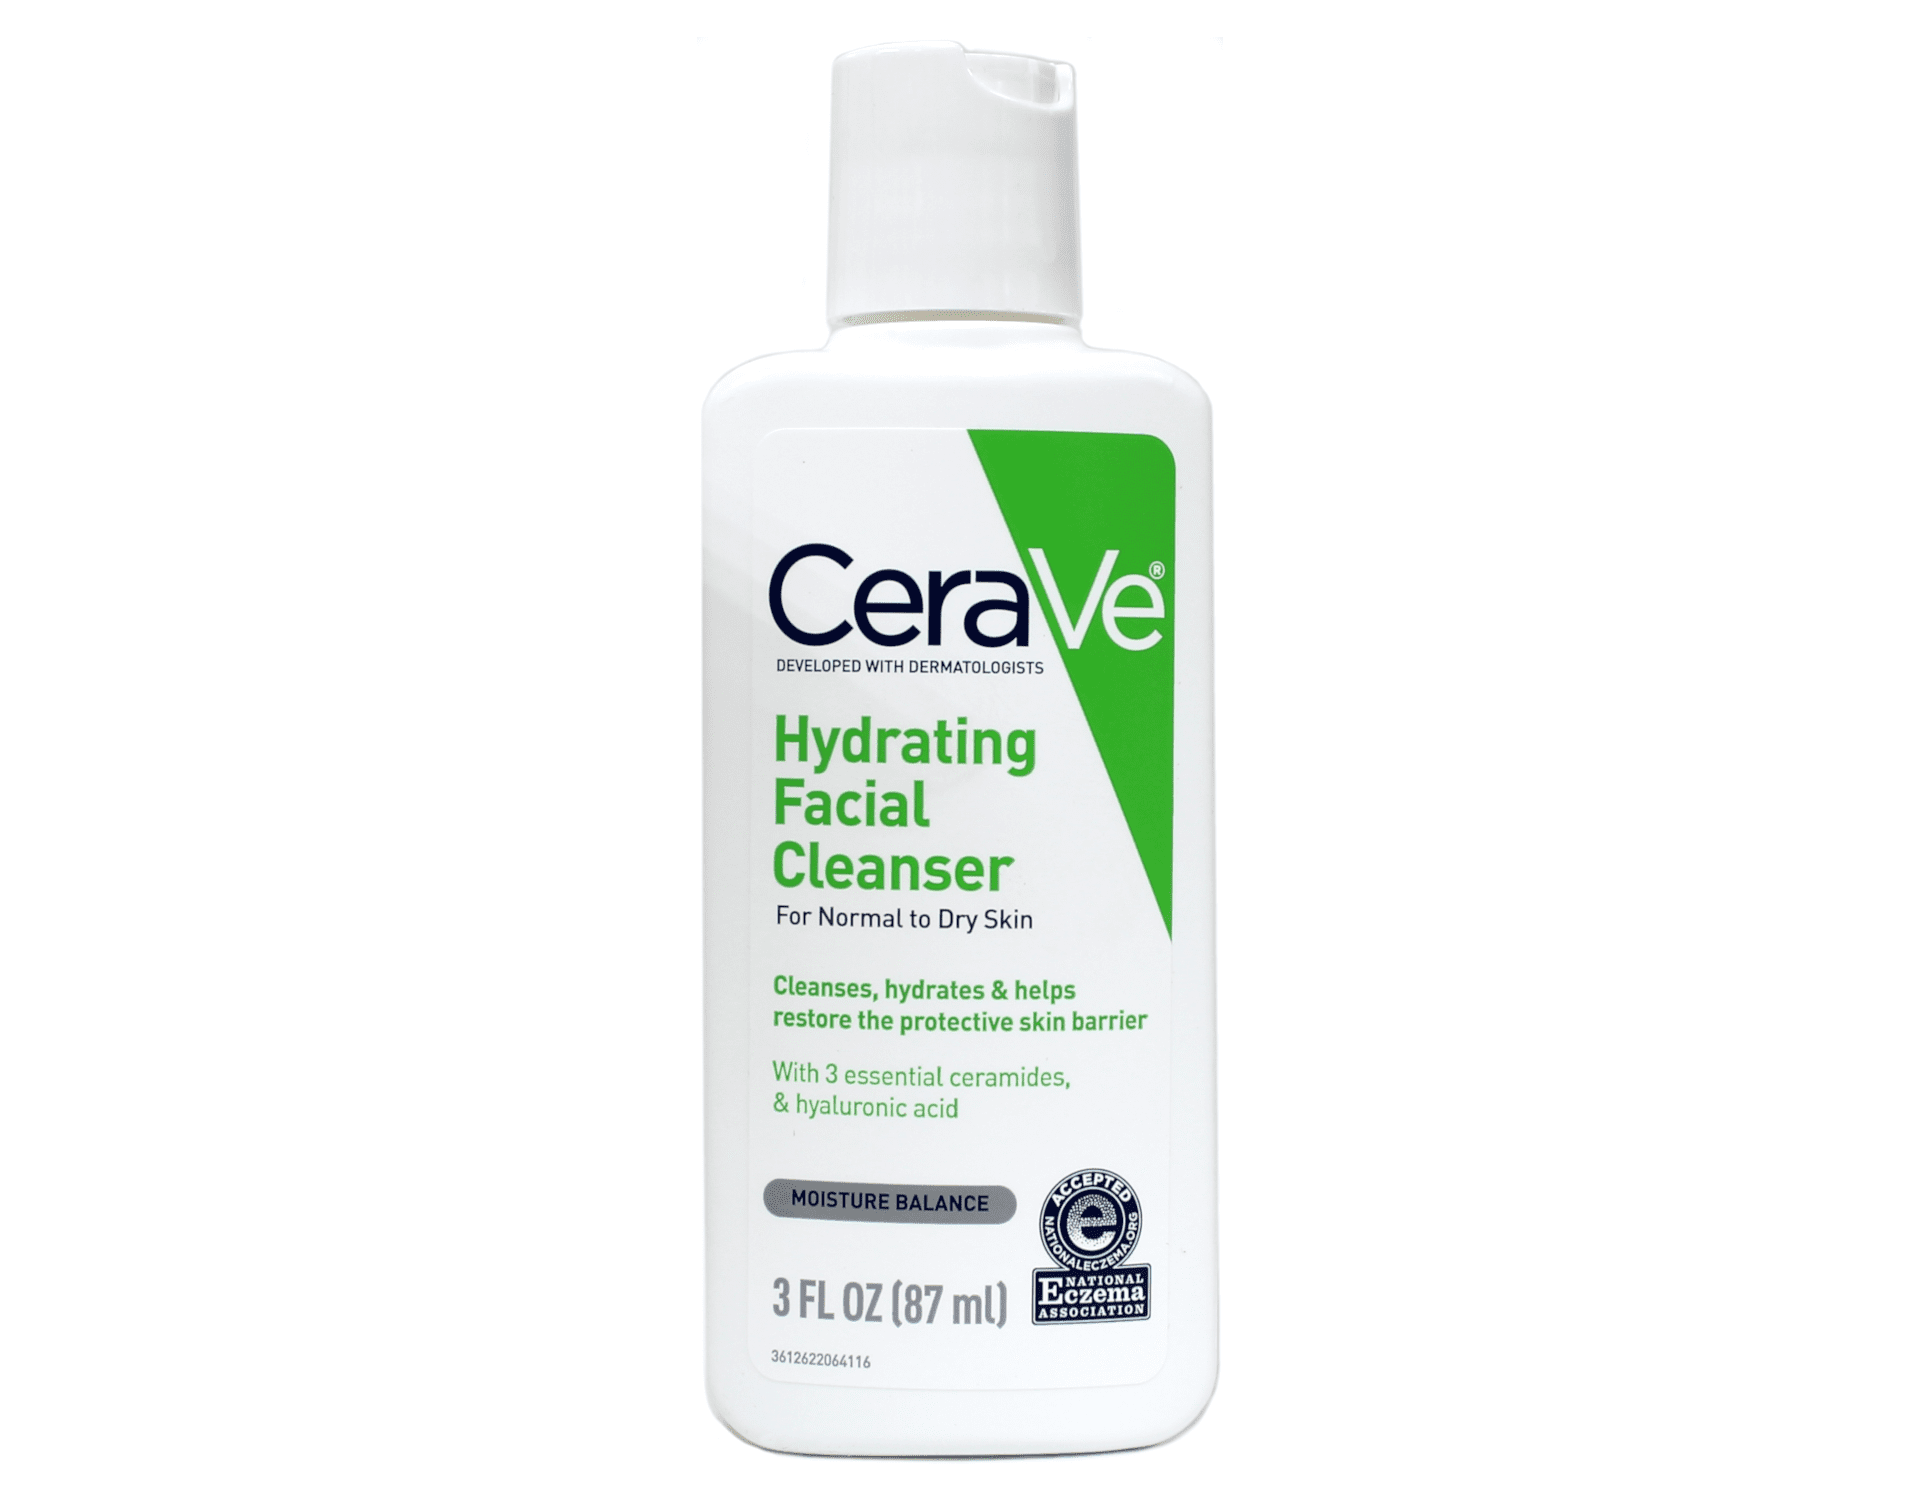 Diplomati entusiastisk skraber CeraVe Hydrating Facial Cleanser for Normal to Dry Skin 3 fl oz -  Walmart.com